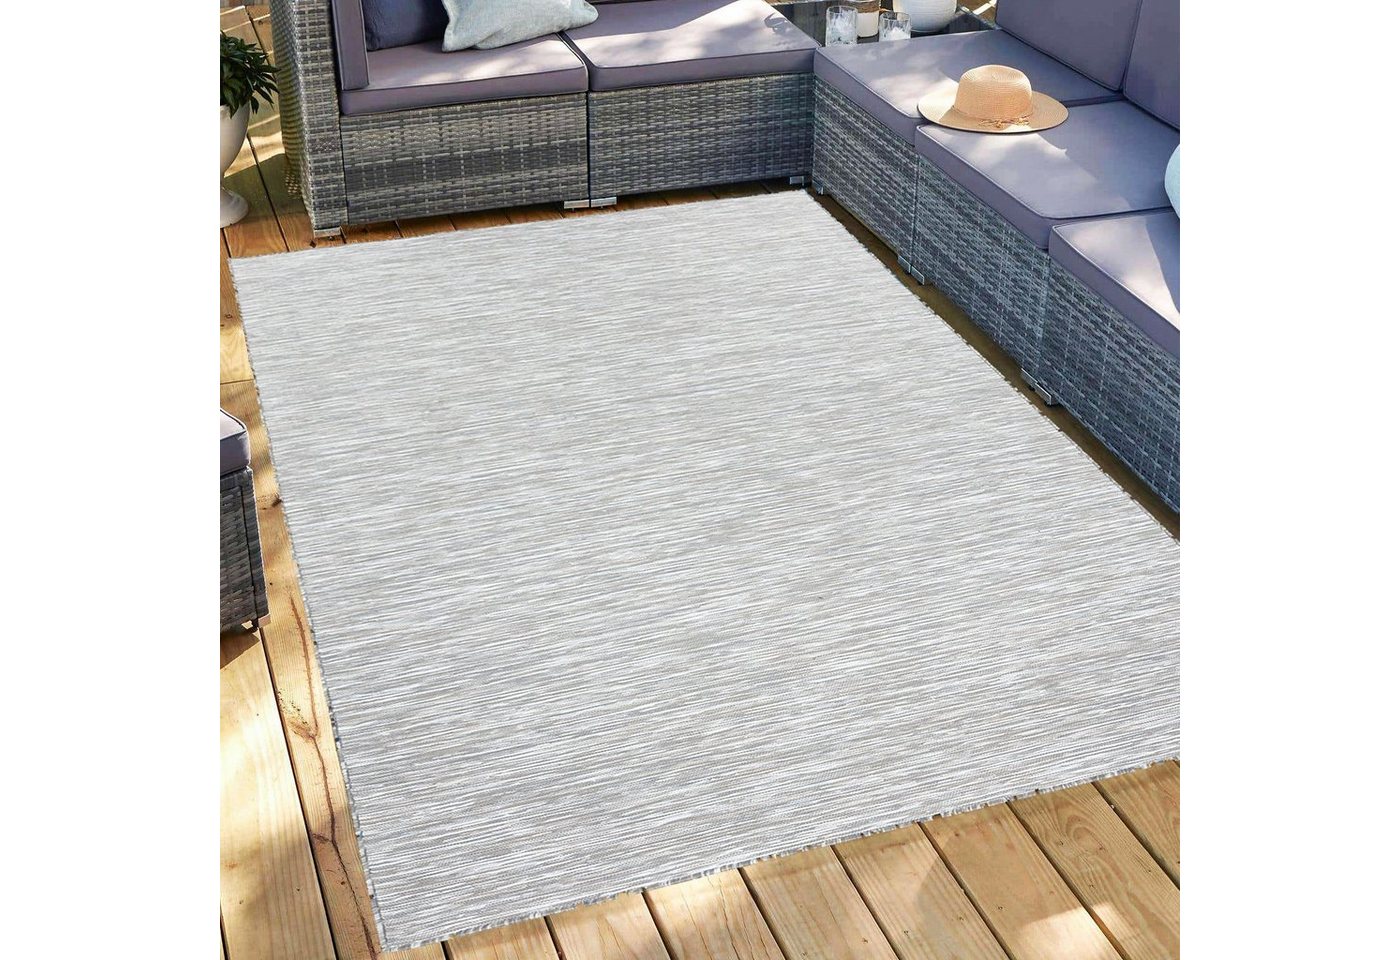 Outdoorteppich Gartenteppich Sisal-Look Teppich Indoor Outdoorteppich, Miovani von Miovani